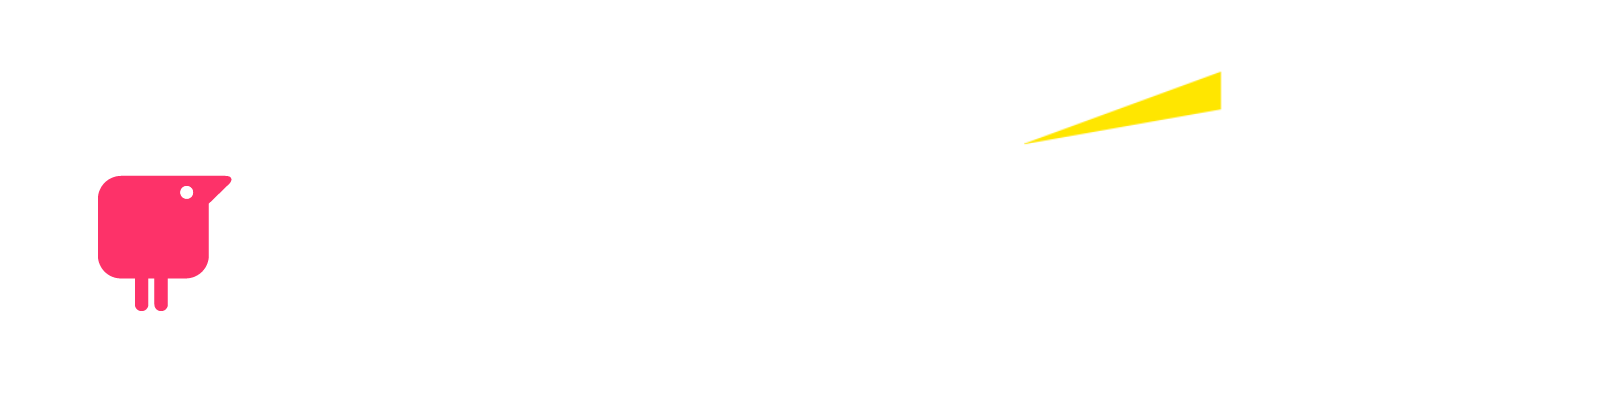 Texthelp and EY logos